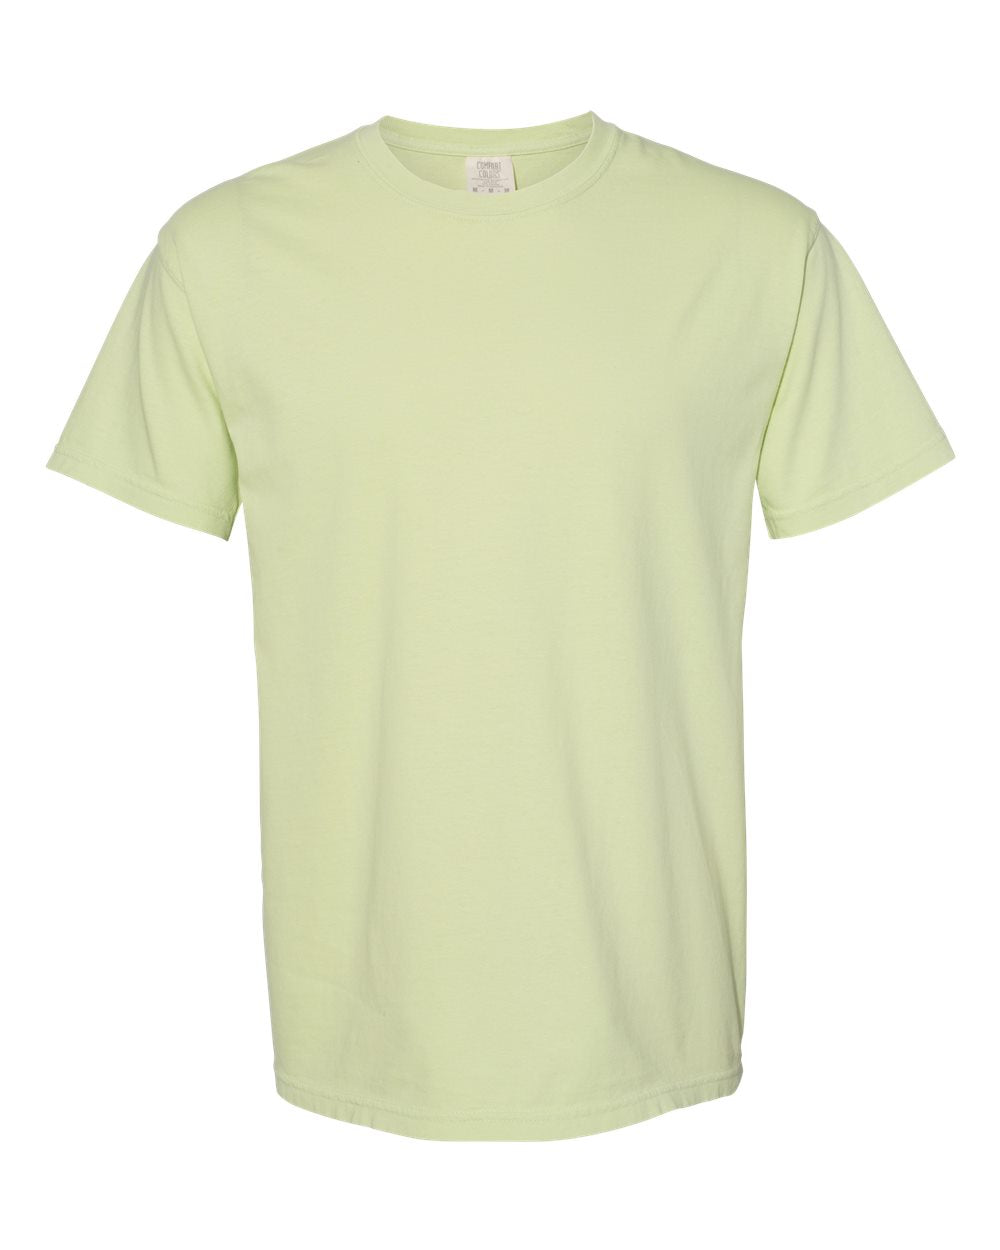 Comfort Colors Heavyweight T-Shirt Size 3XLarge